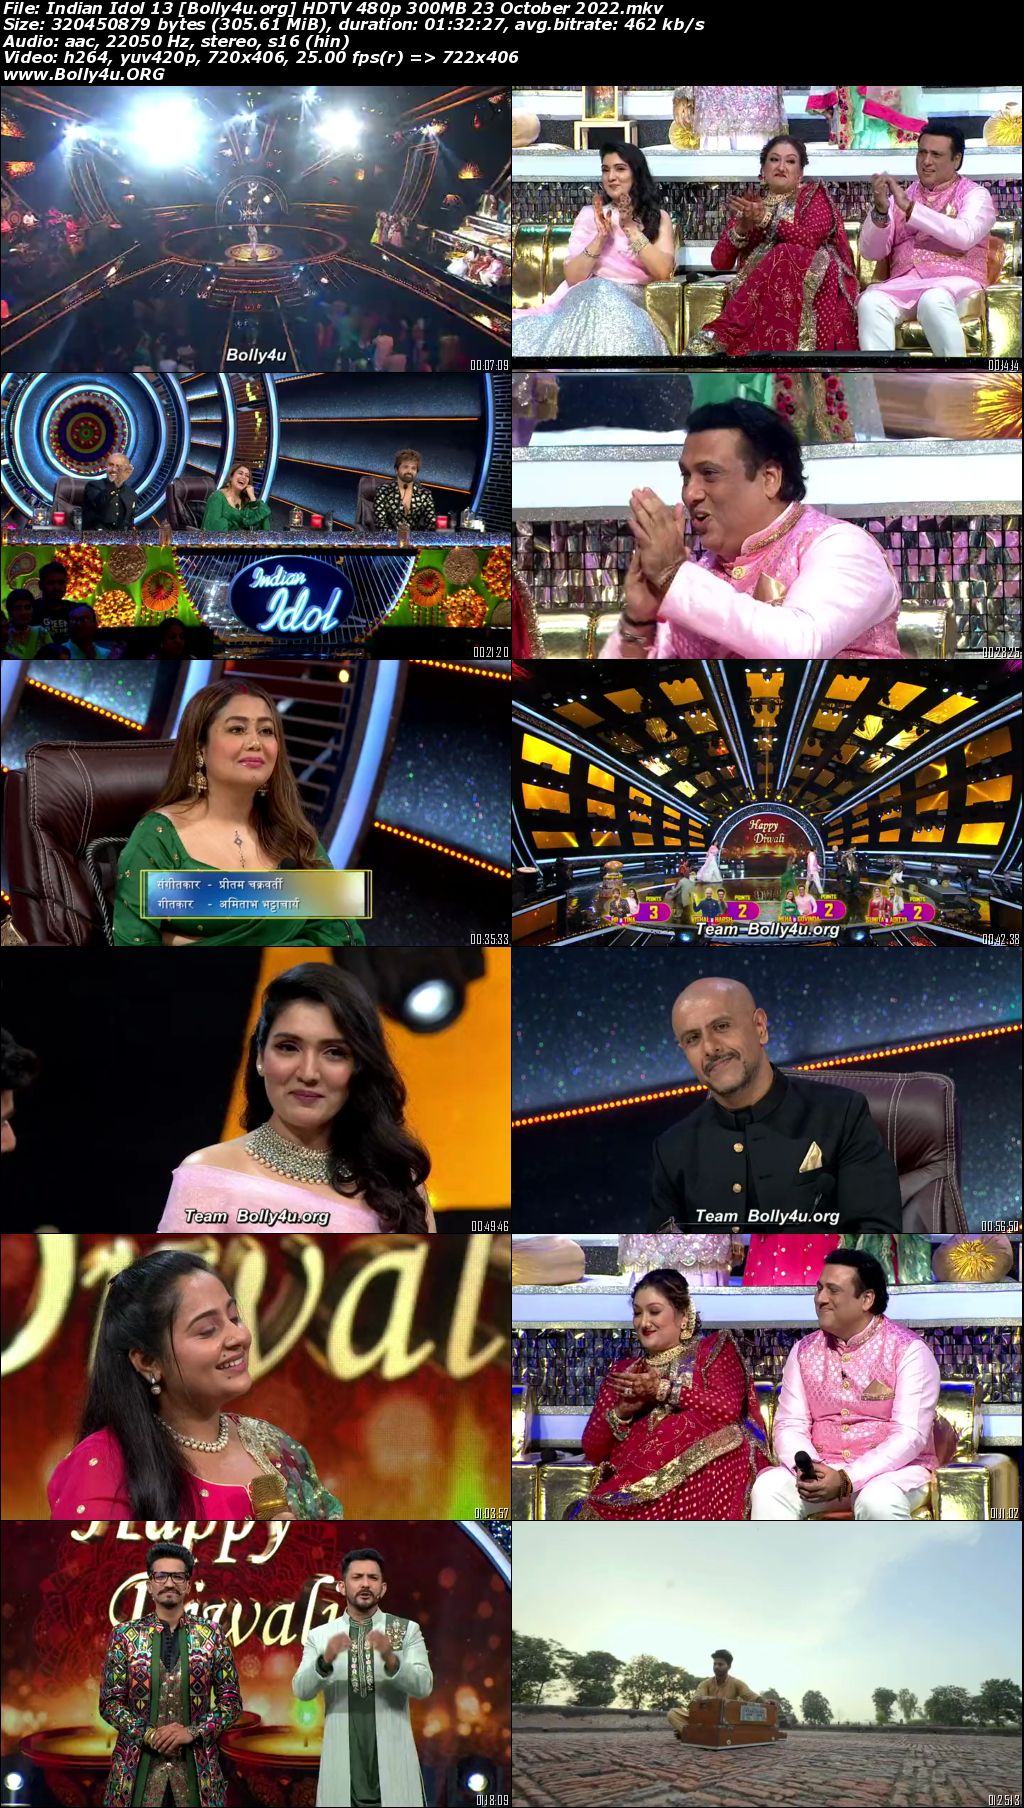 Indian Idol 13 HDTV 480p 300MB 23 October 2022 Download